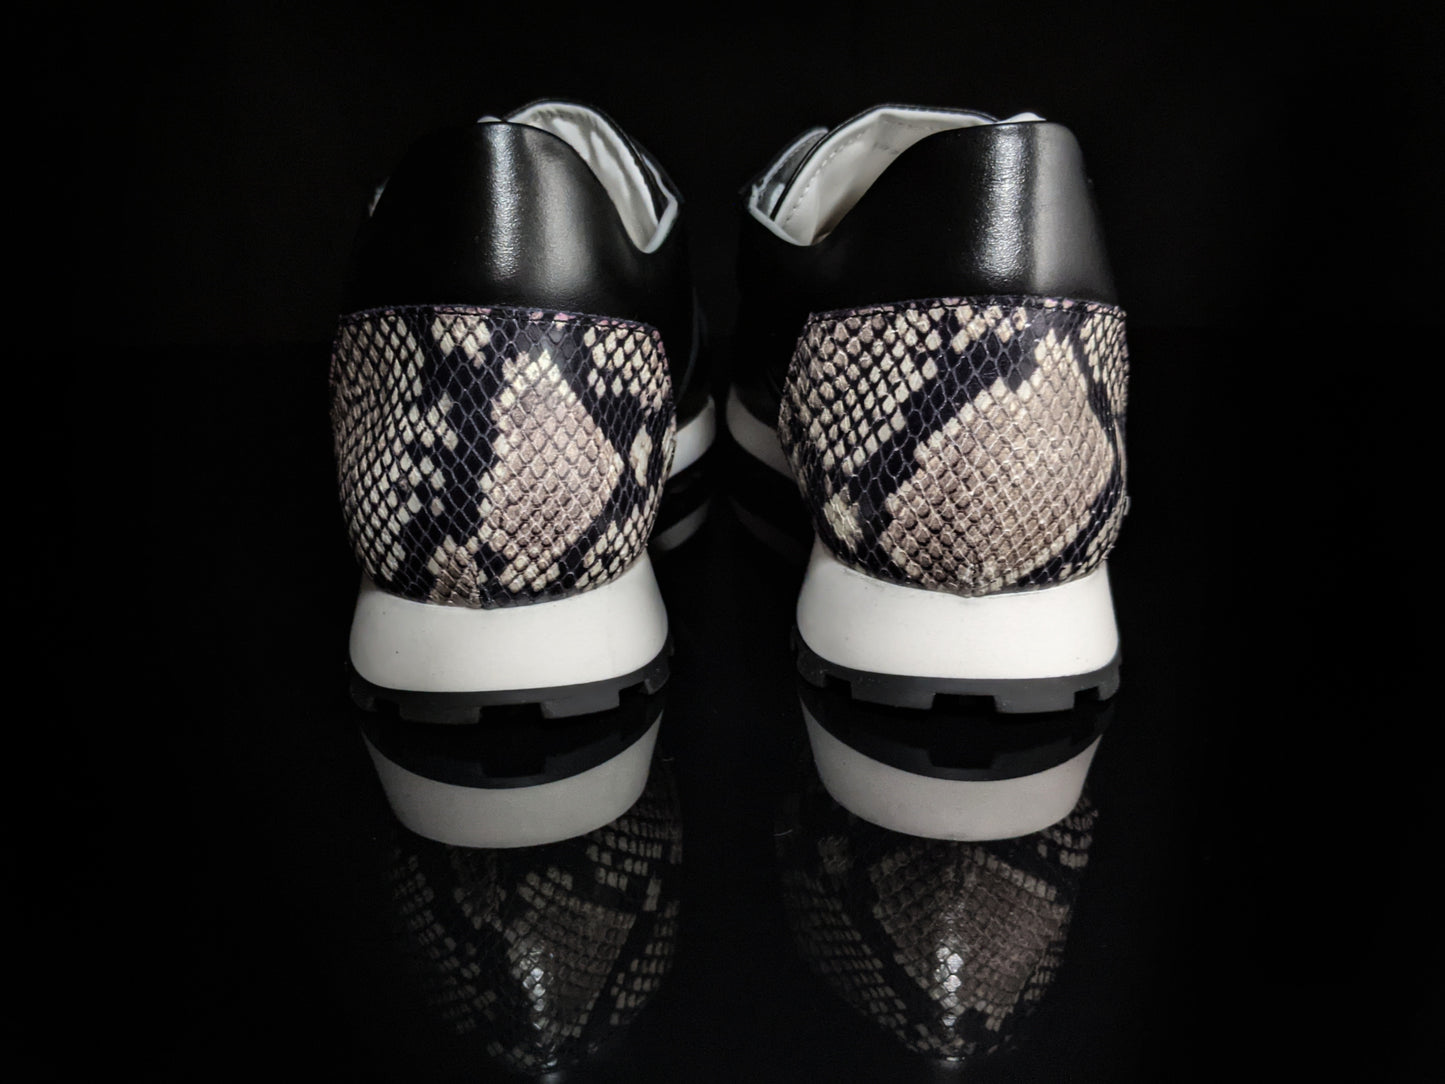 Roberto Cavalli  Snakeskin Embossed Leather Sneakers